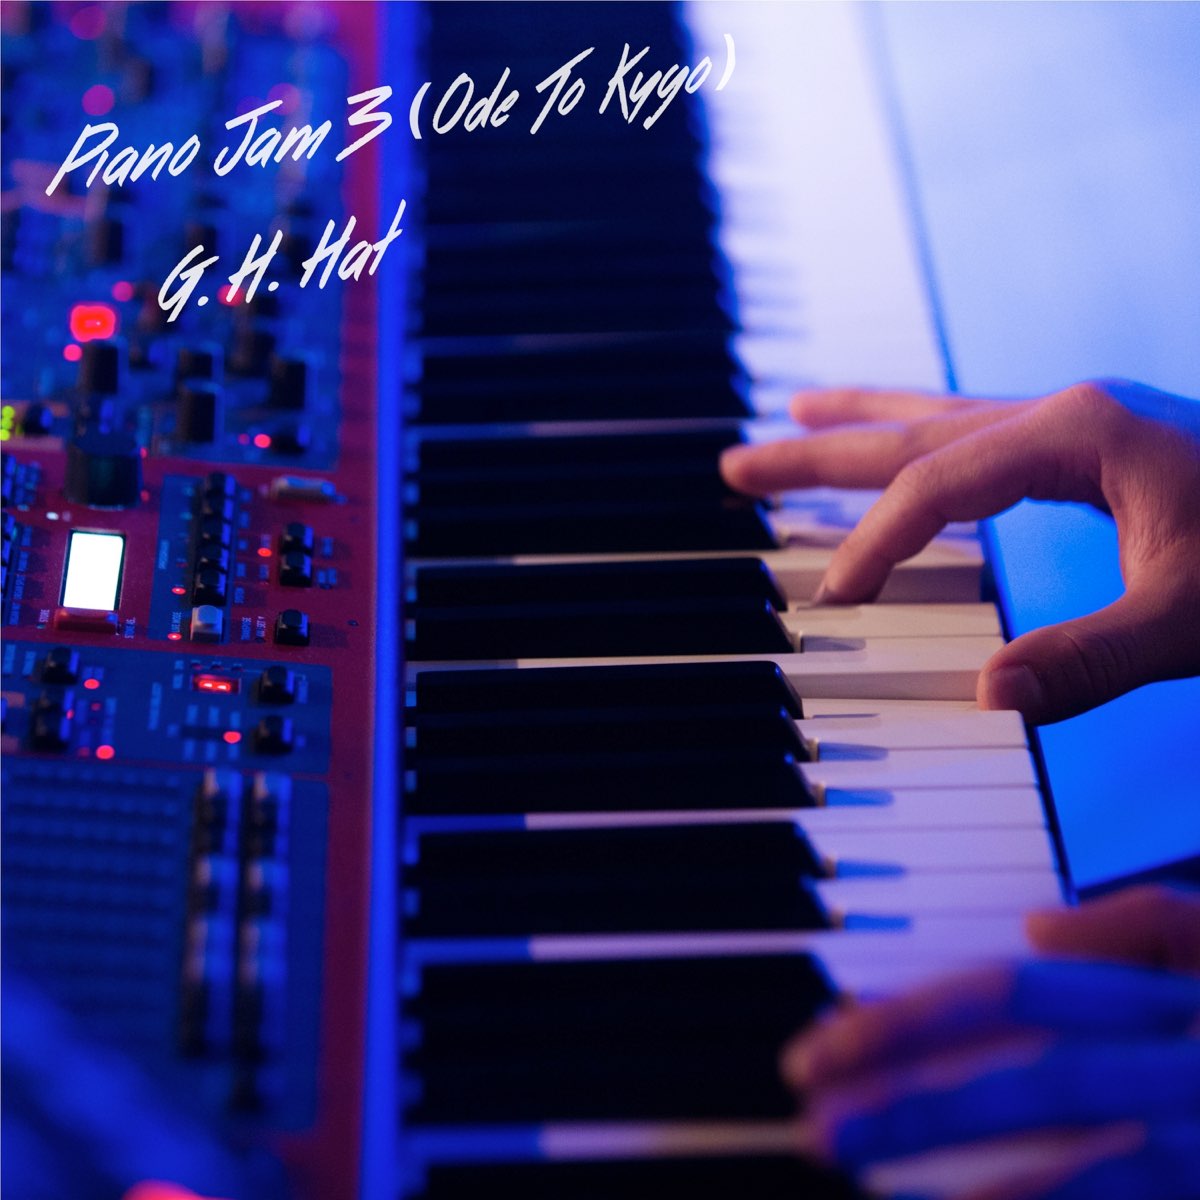 Piano Jam 3 (Ode to Kygo) - Single – Album par G.H. Hat – Apple Music